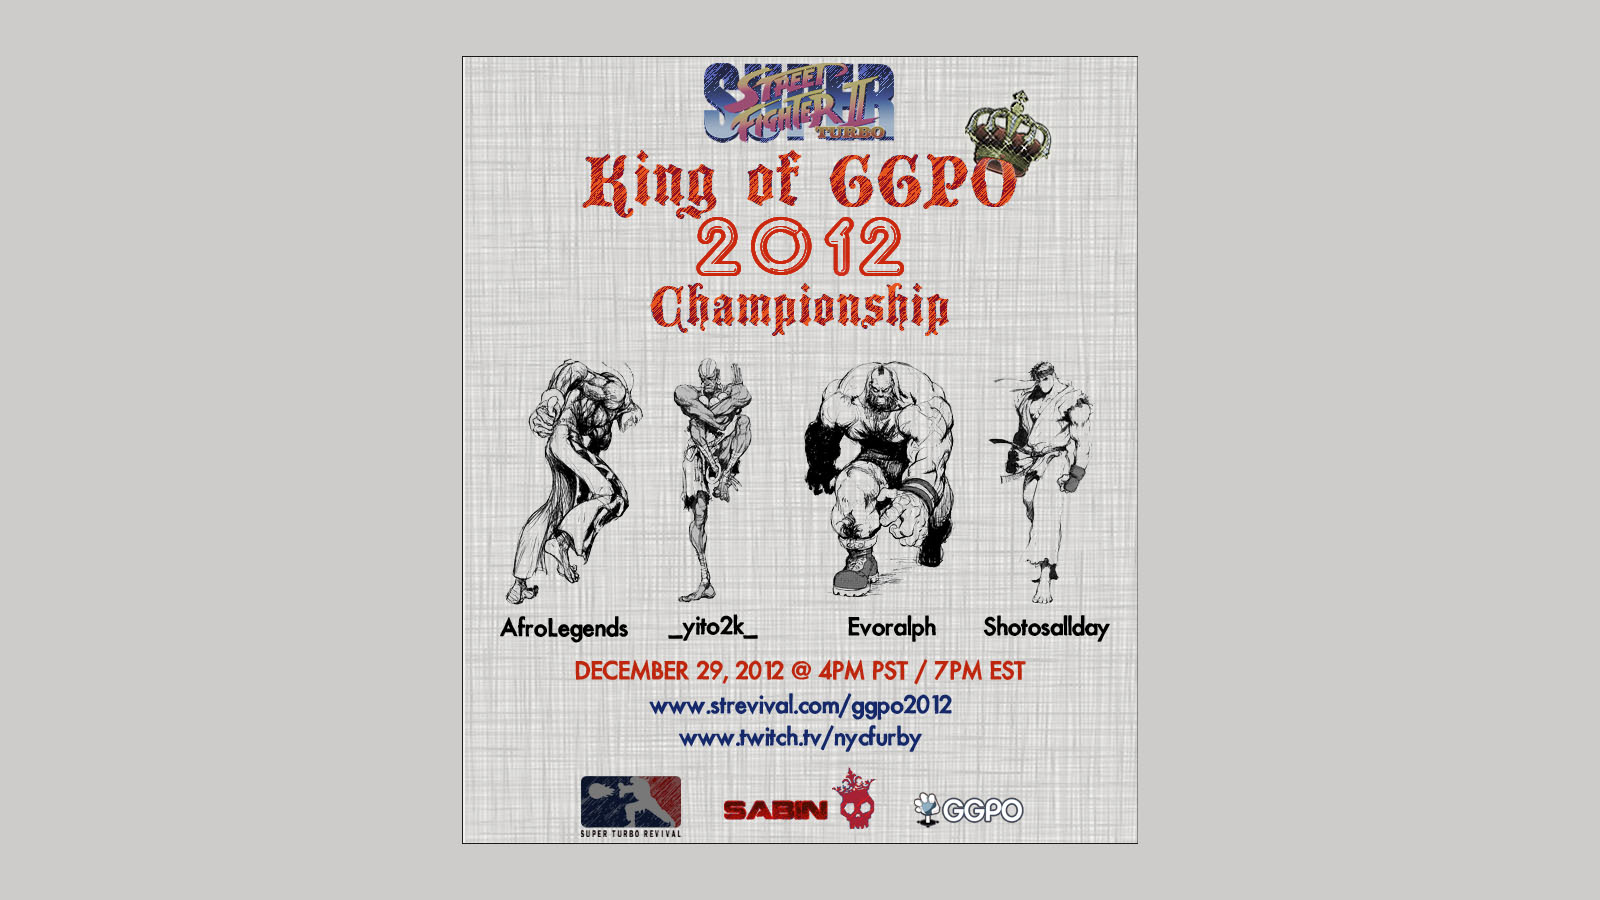 King of GGPO tournament promotion